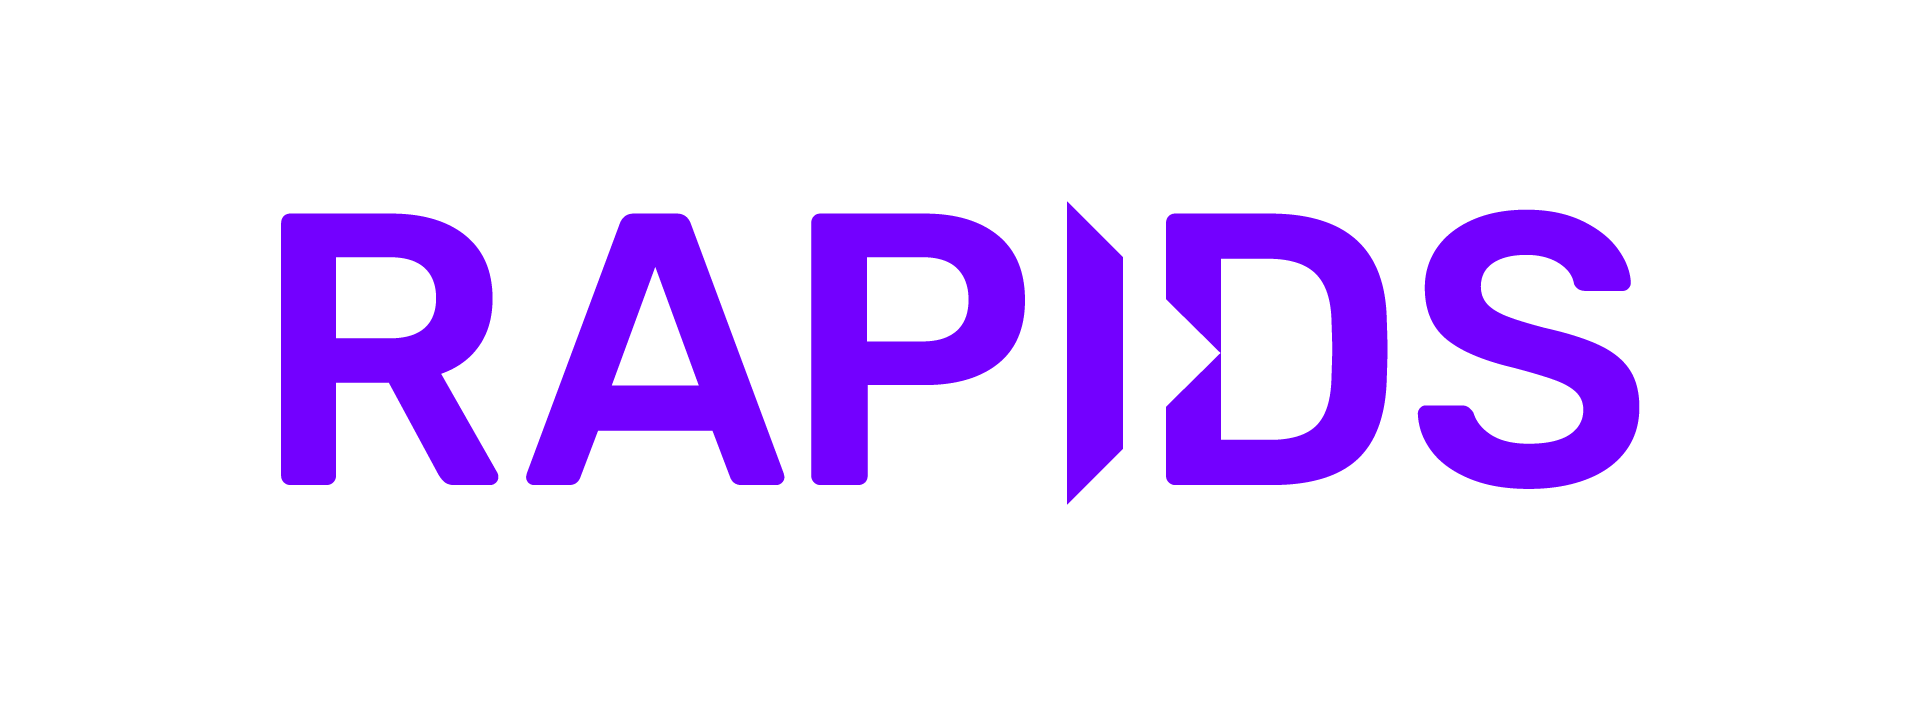 RAPIDS Deployment Documentation  documentation - Home